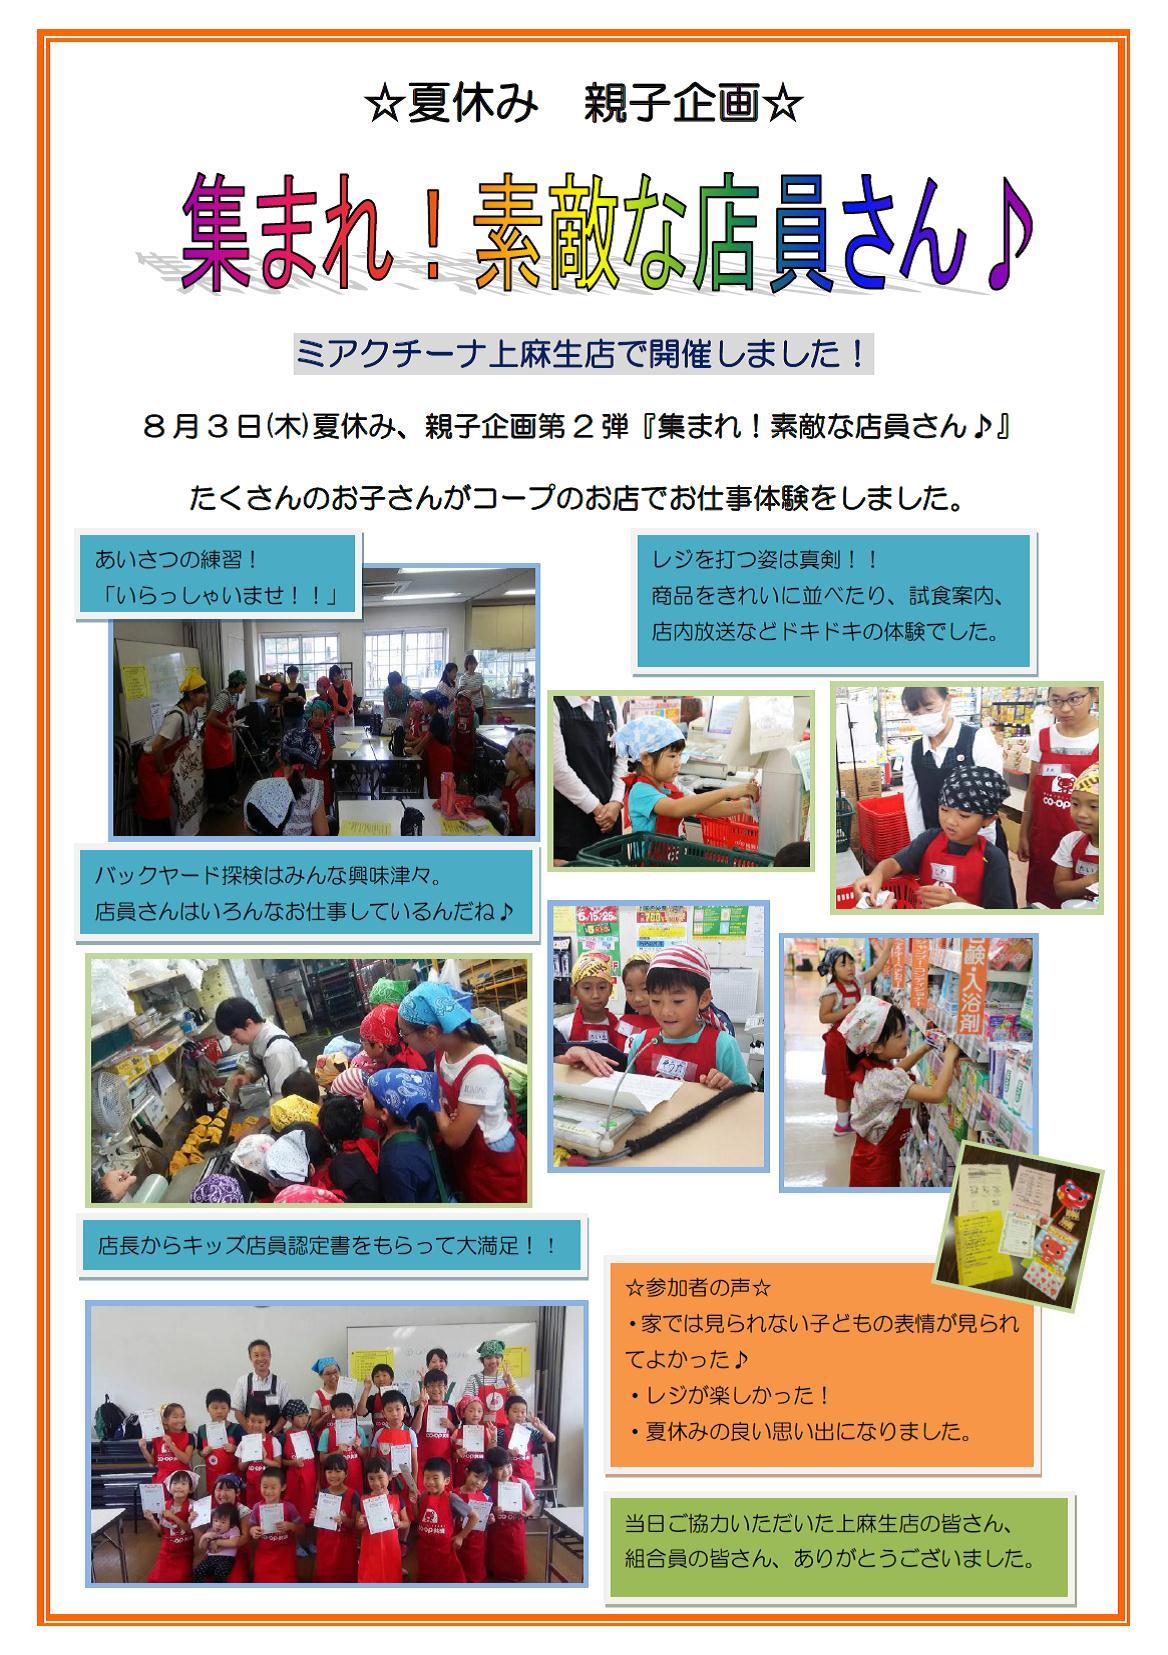 http://kanagawa.ucoop.or.jp/hiroba/areanews/files/20170803%20kawasaki2-kids.jpg